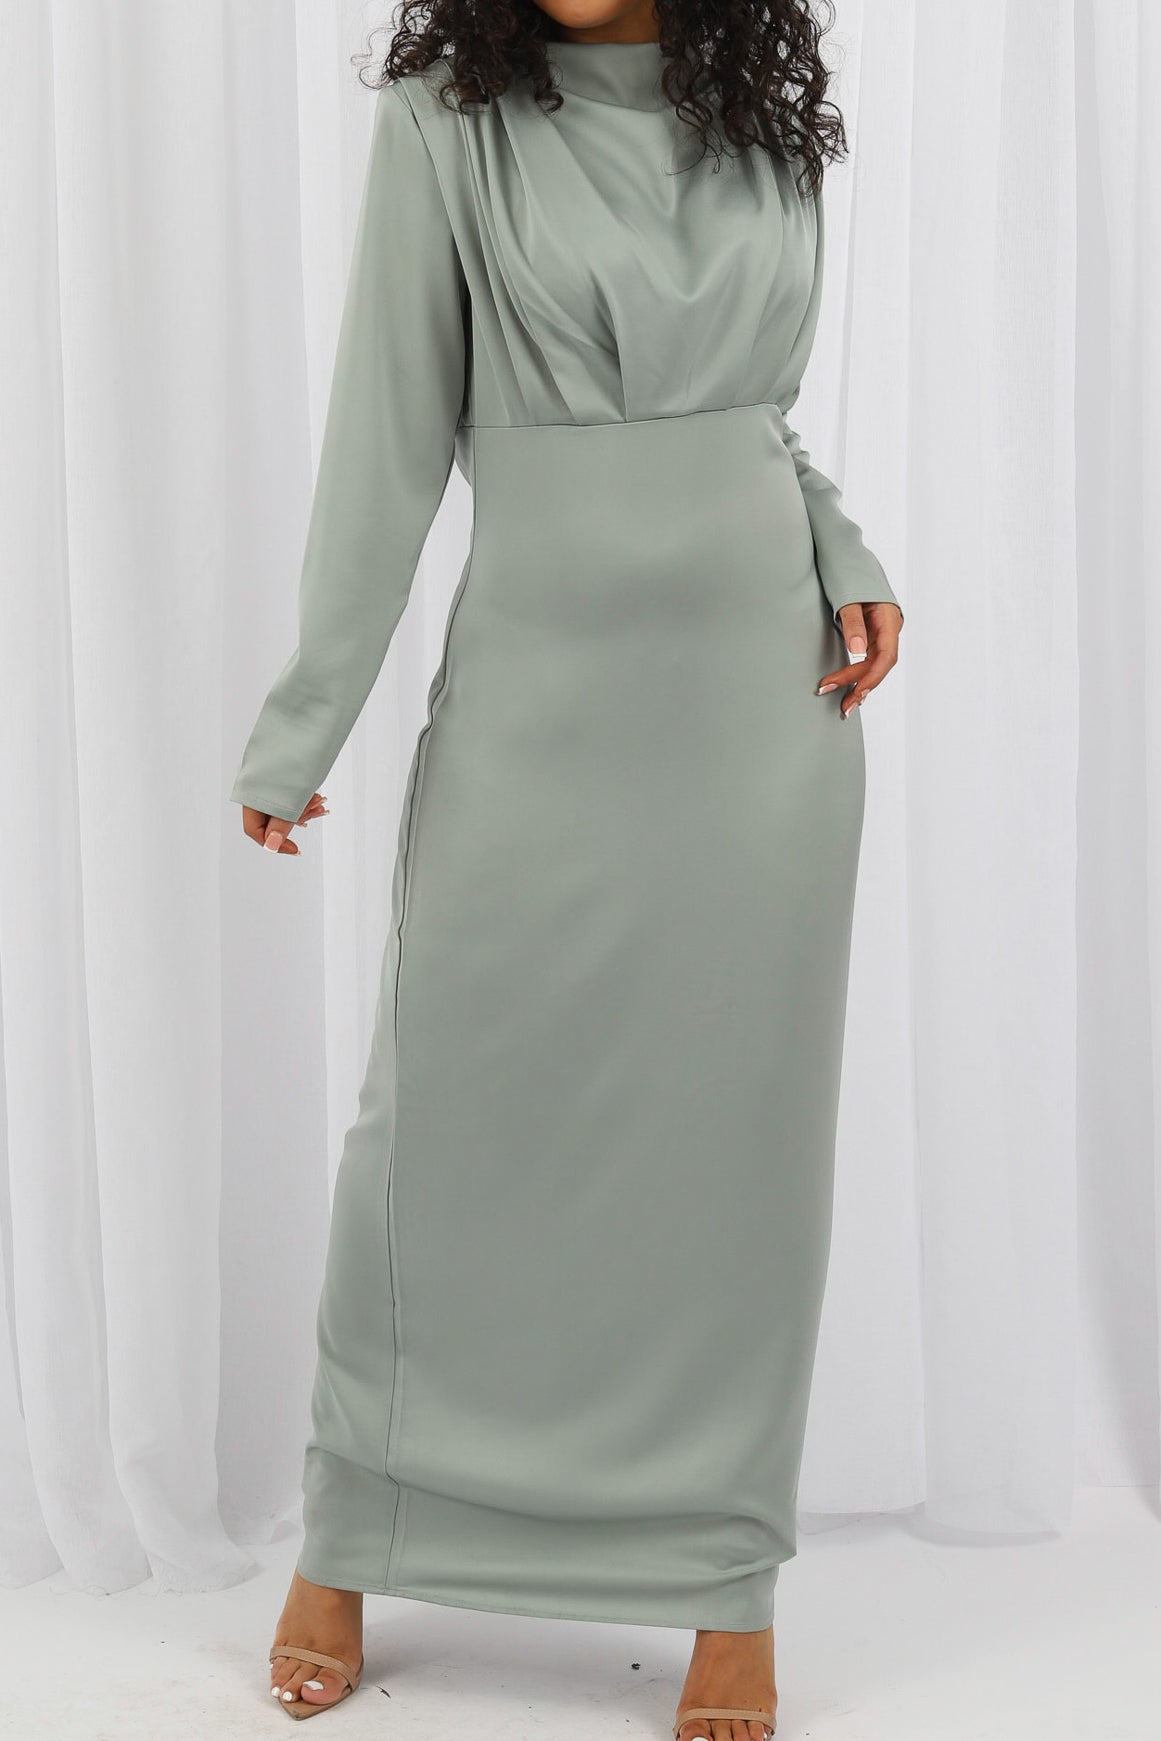 M7873Sage-dress-abaya